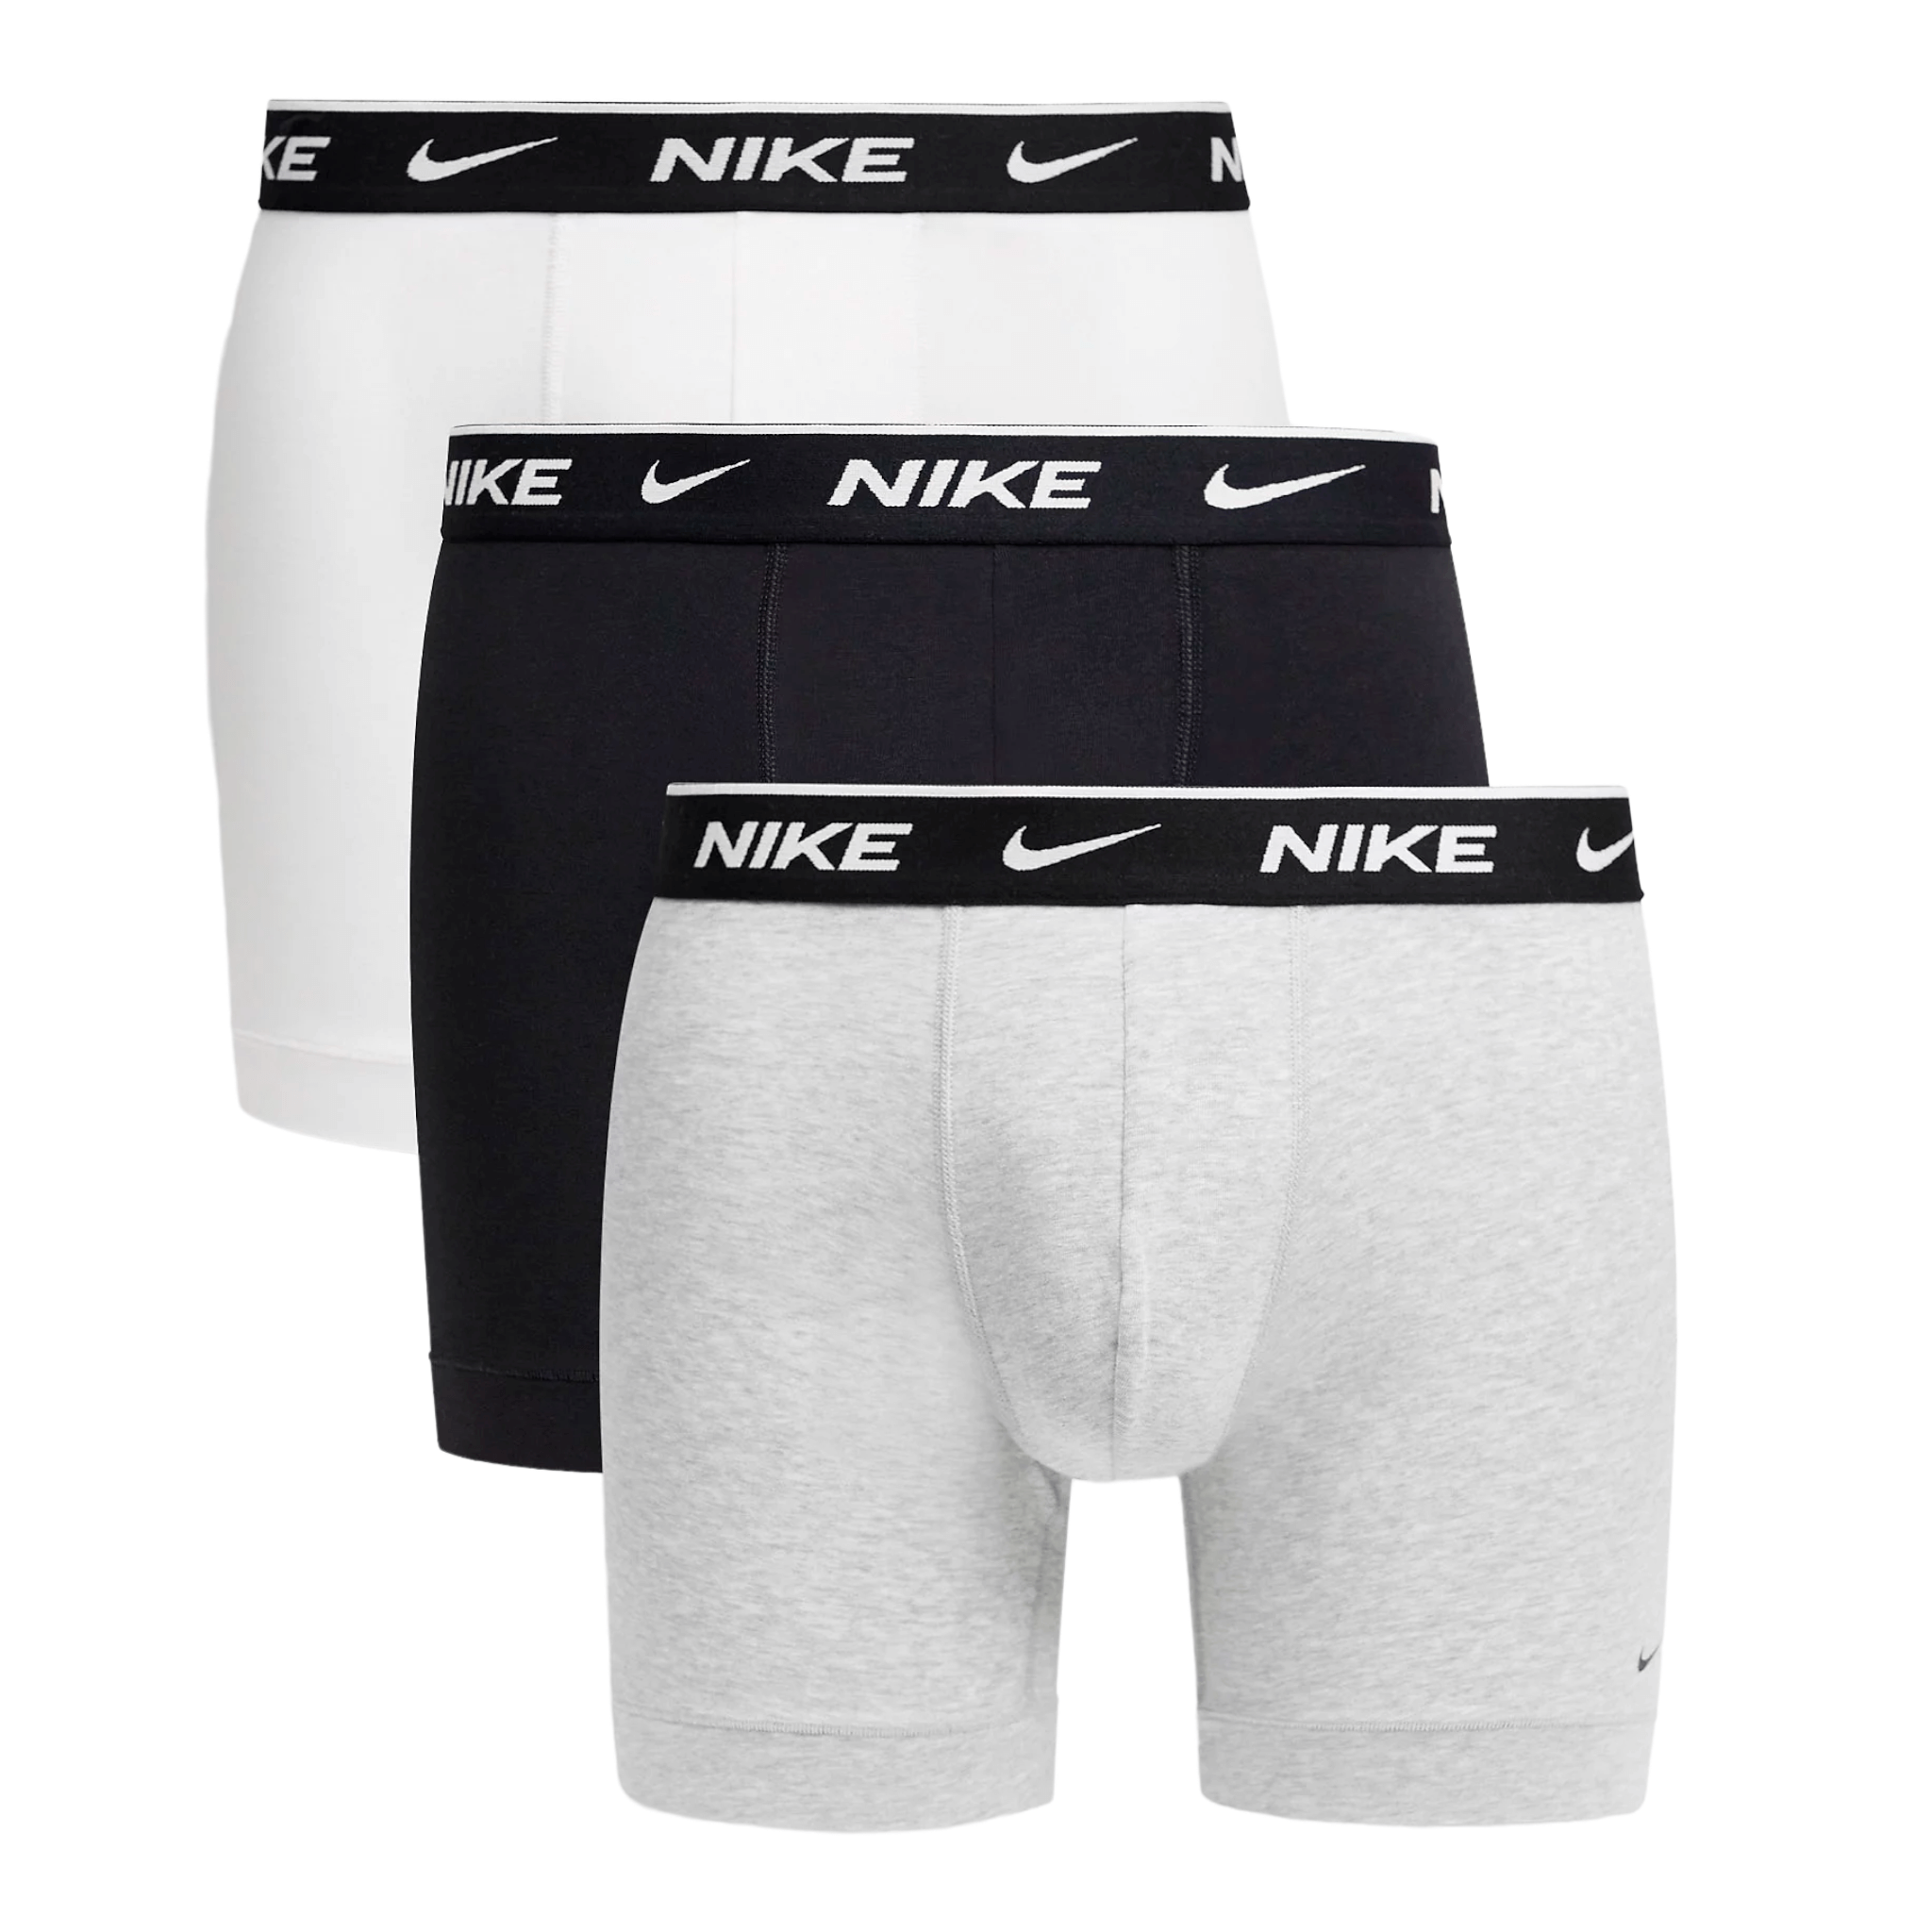 цена Трусы боксеры Nike Brief 3 Pack, 3 предмета, белый/черный/серый